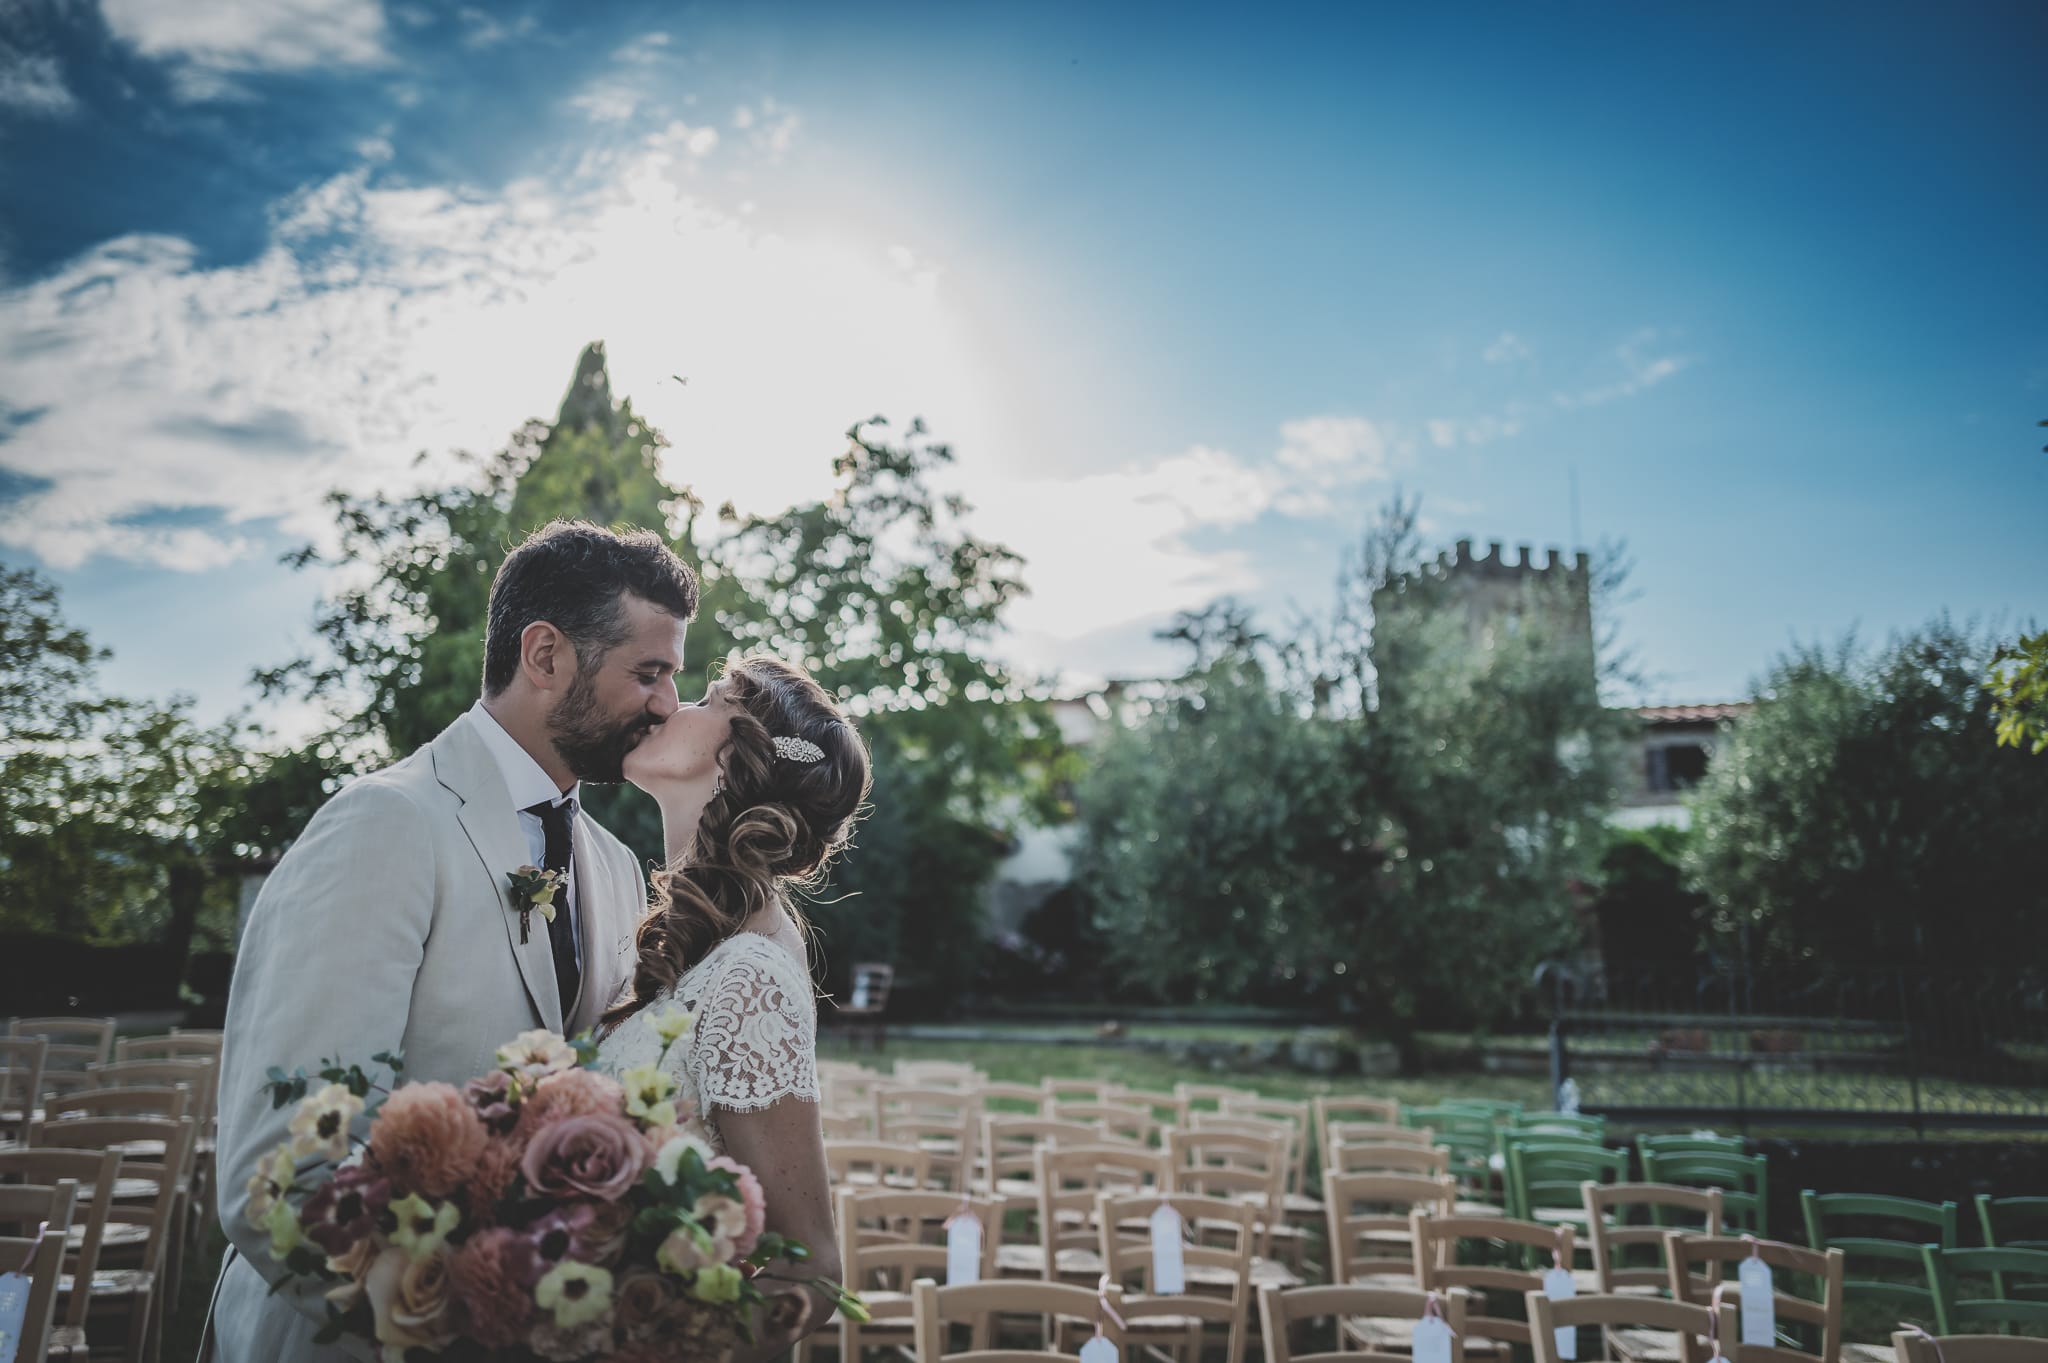 Wedding In Chianti, Florence - Michele Belloni Wedding Photographer in Tuscany